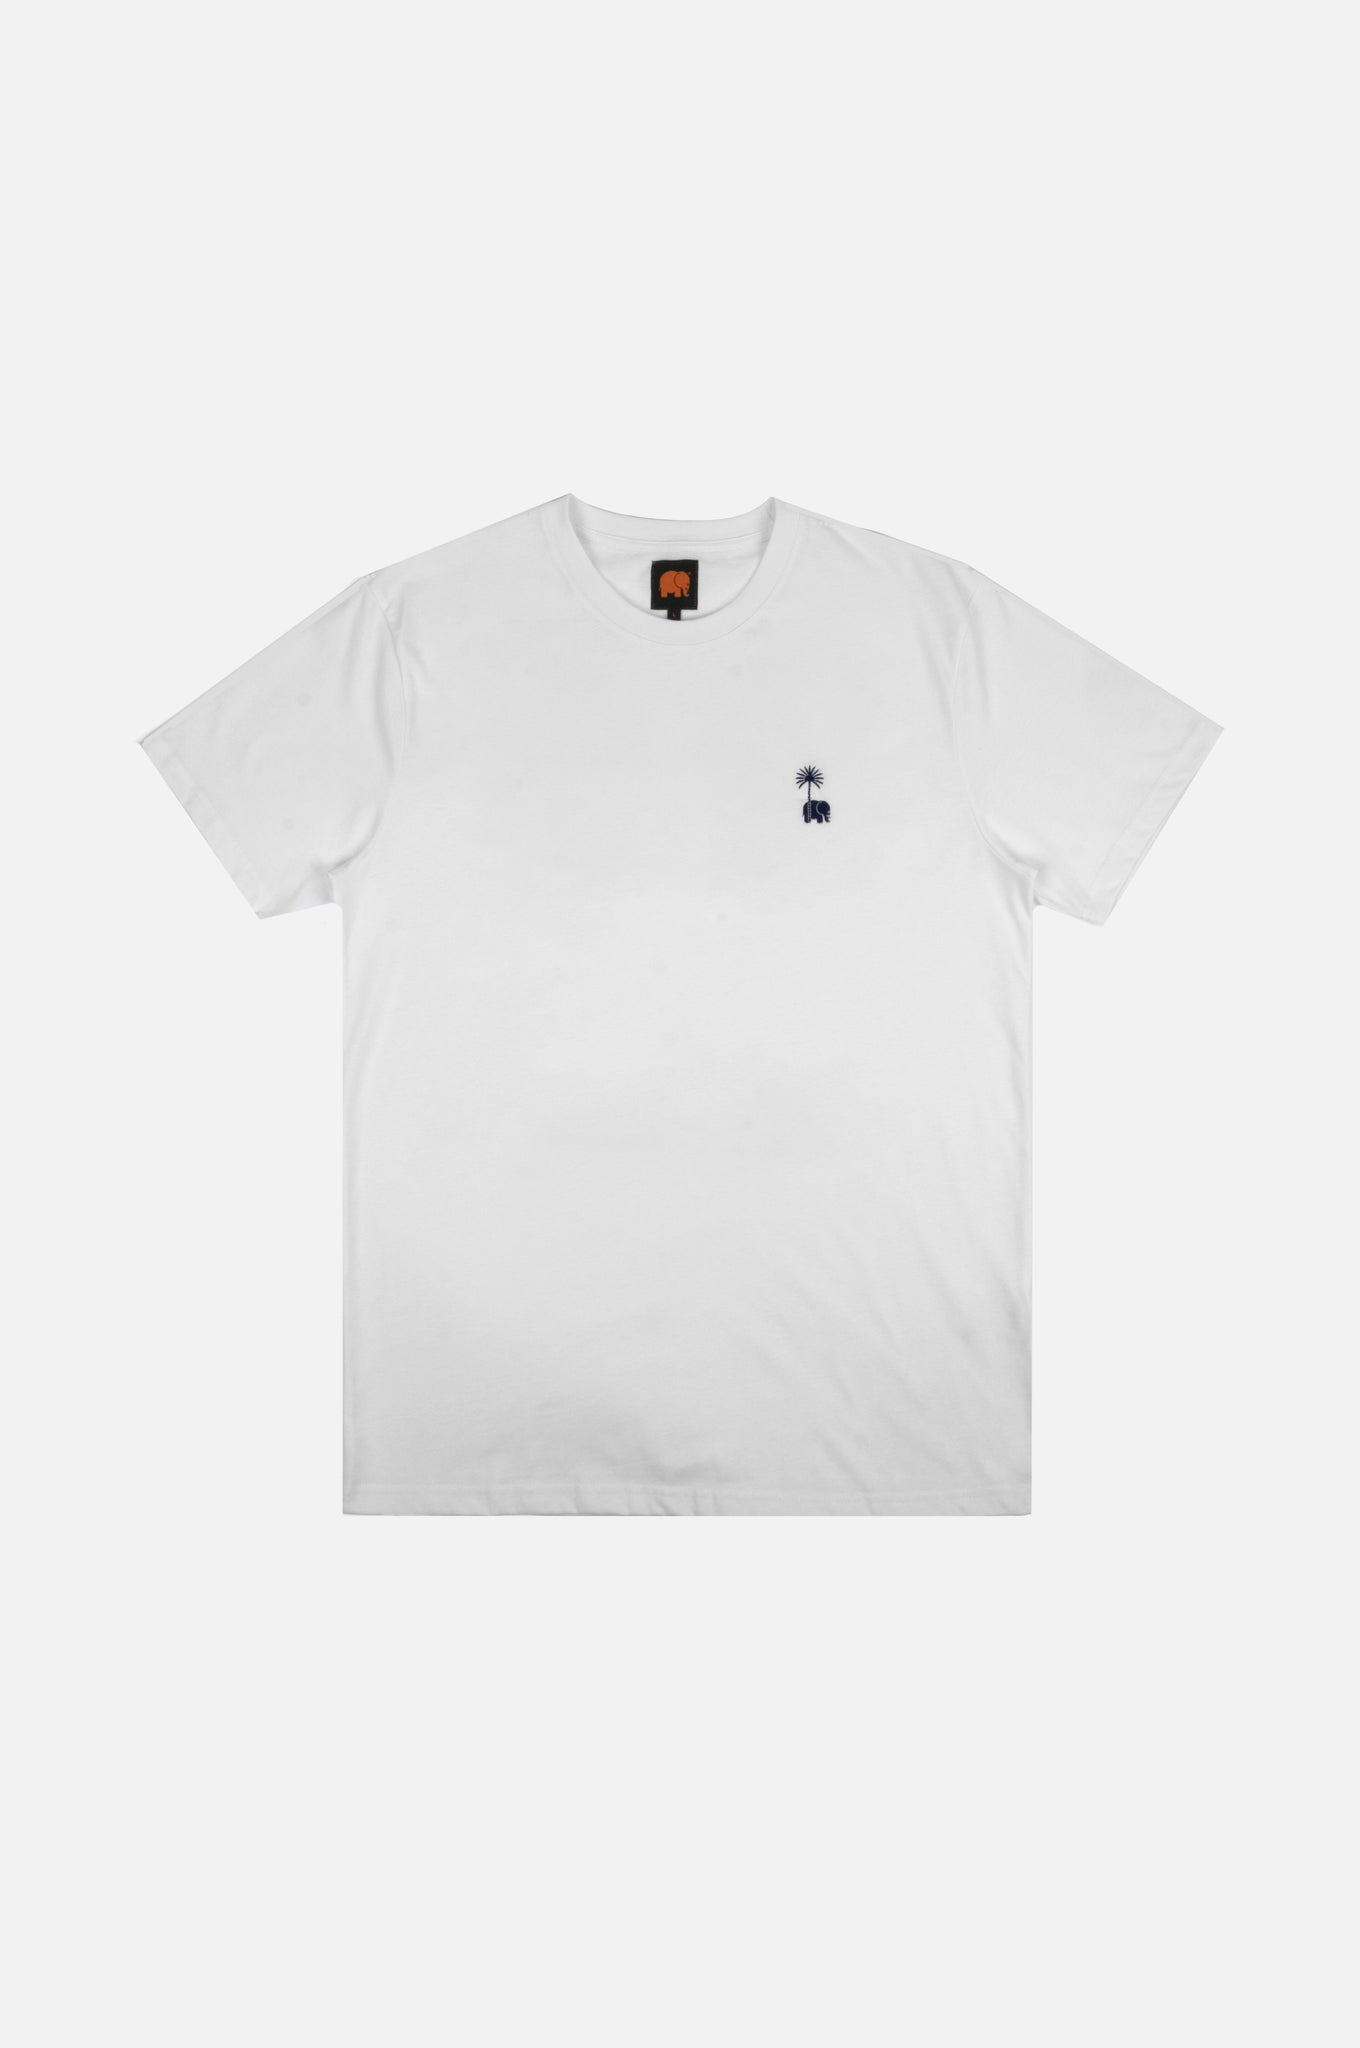 Antonyo Marest x Trendsplant Hut Blueprint T-Shirt